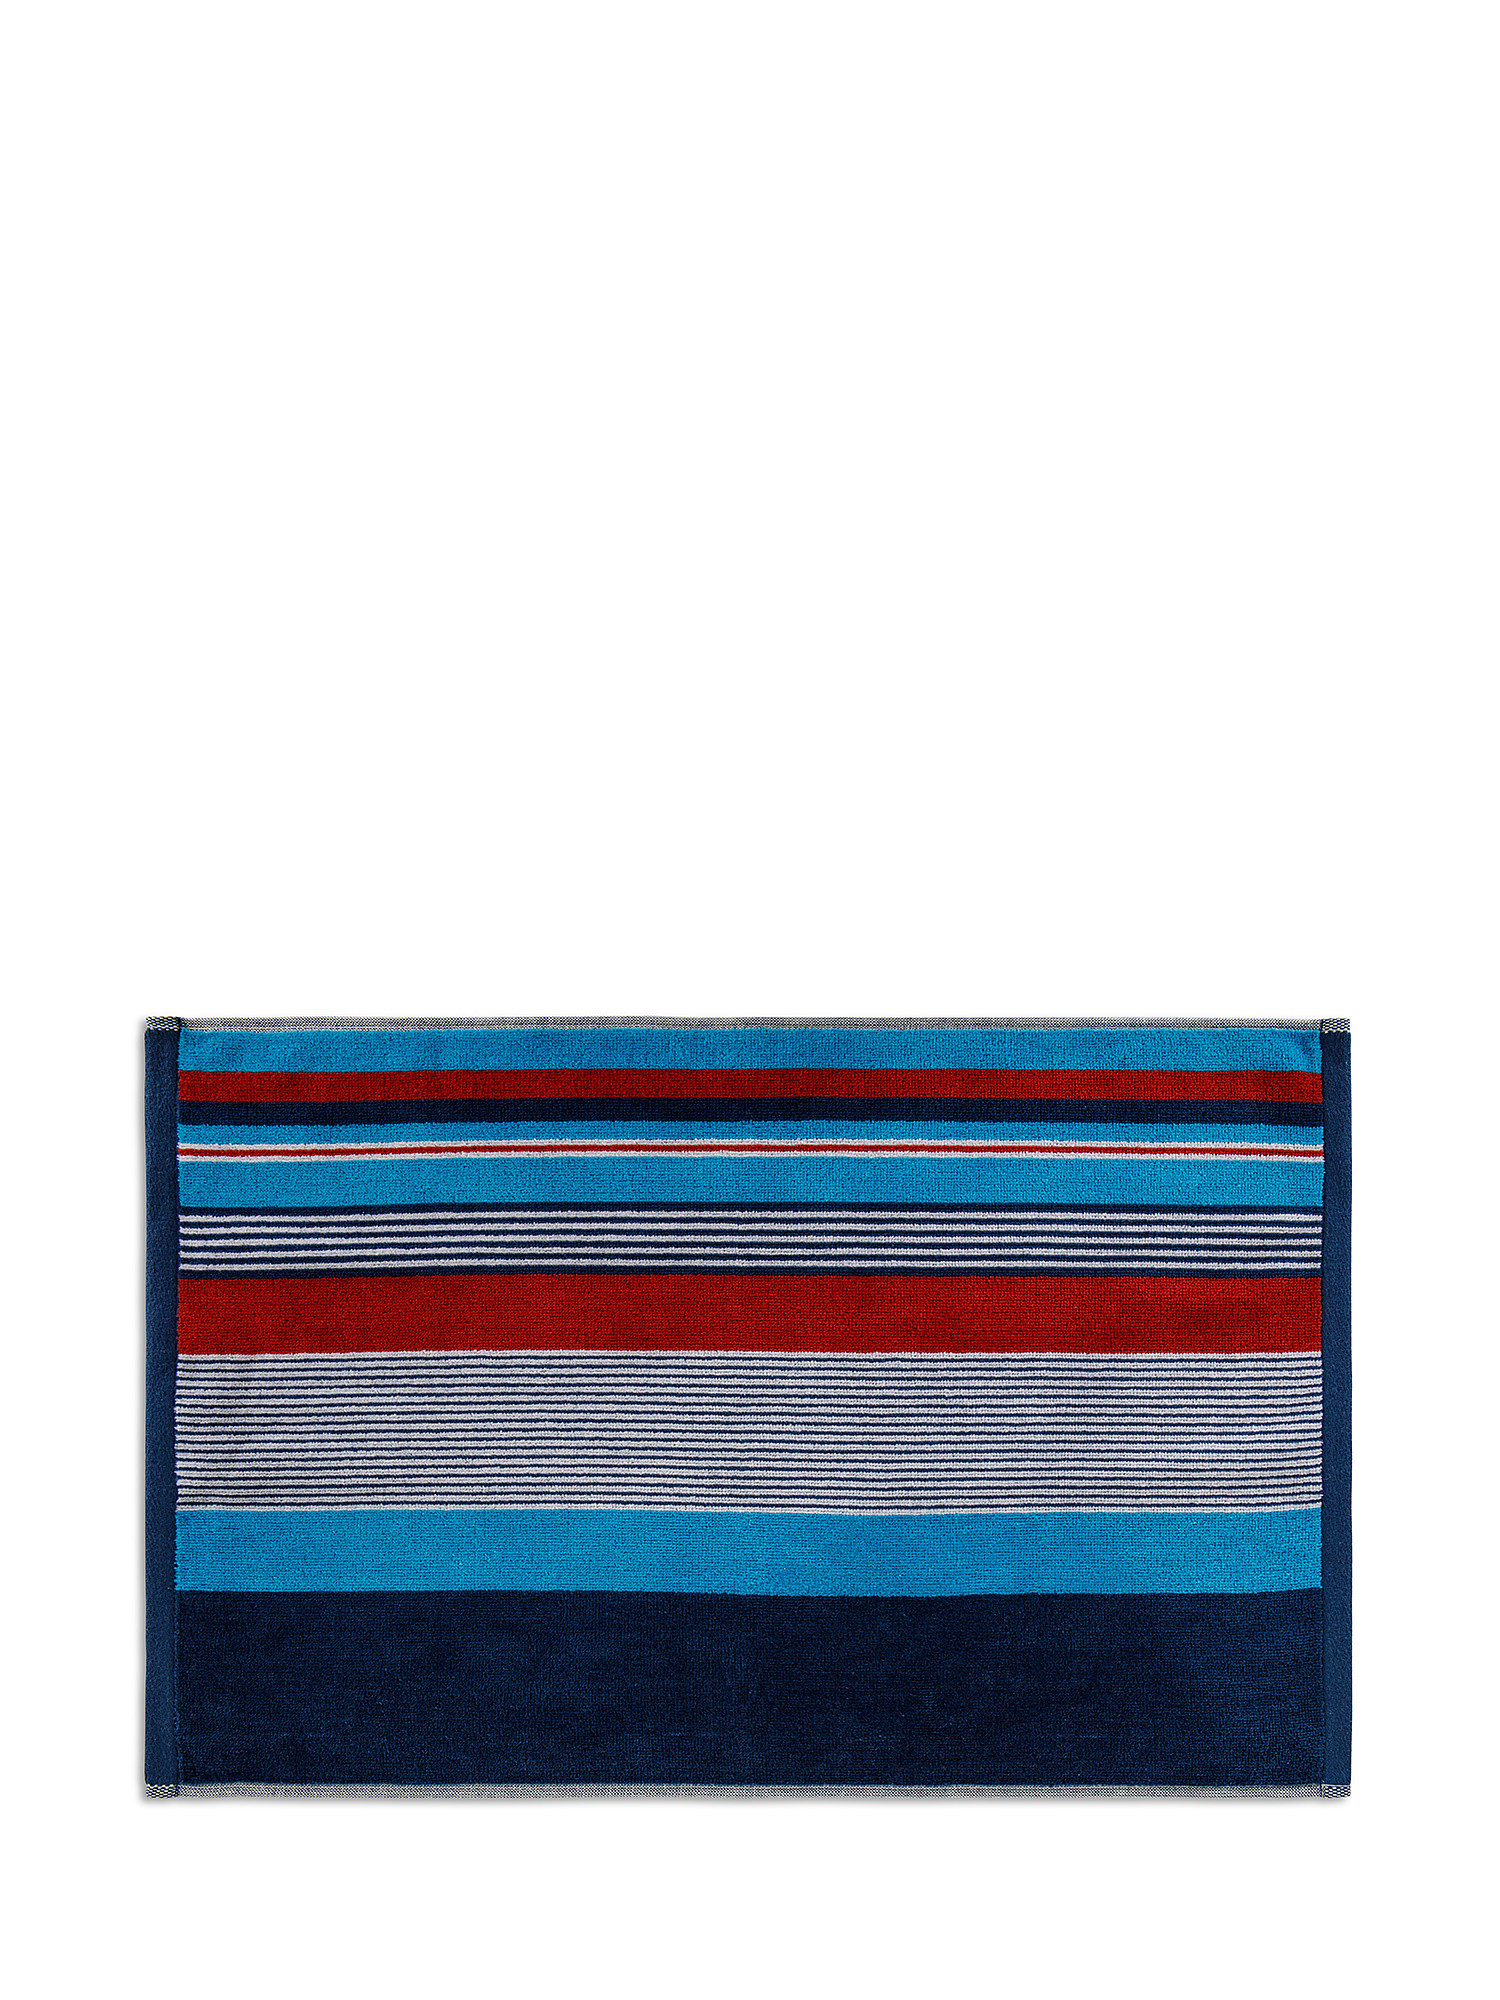 Asciugamano cotone velour motivo a righe, Blu, large image number 1